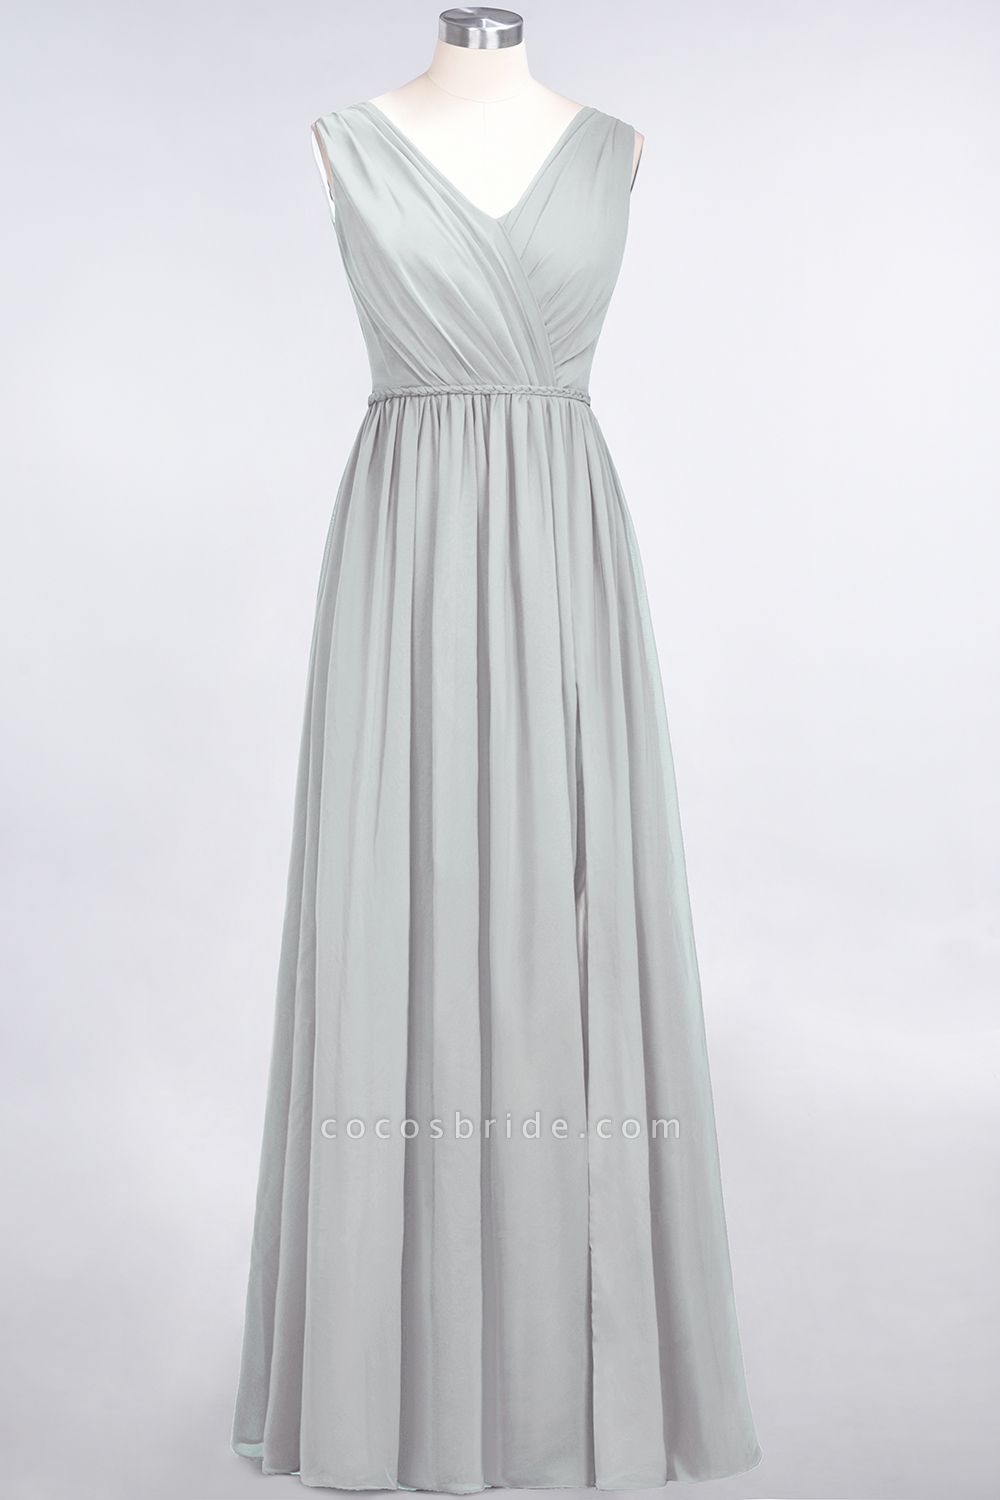 Classy Wide Straps V-neck A-Line Chiffon Ruffles Prom Dress With Side Slit